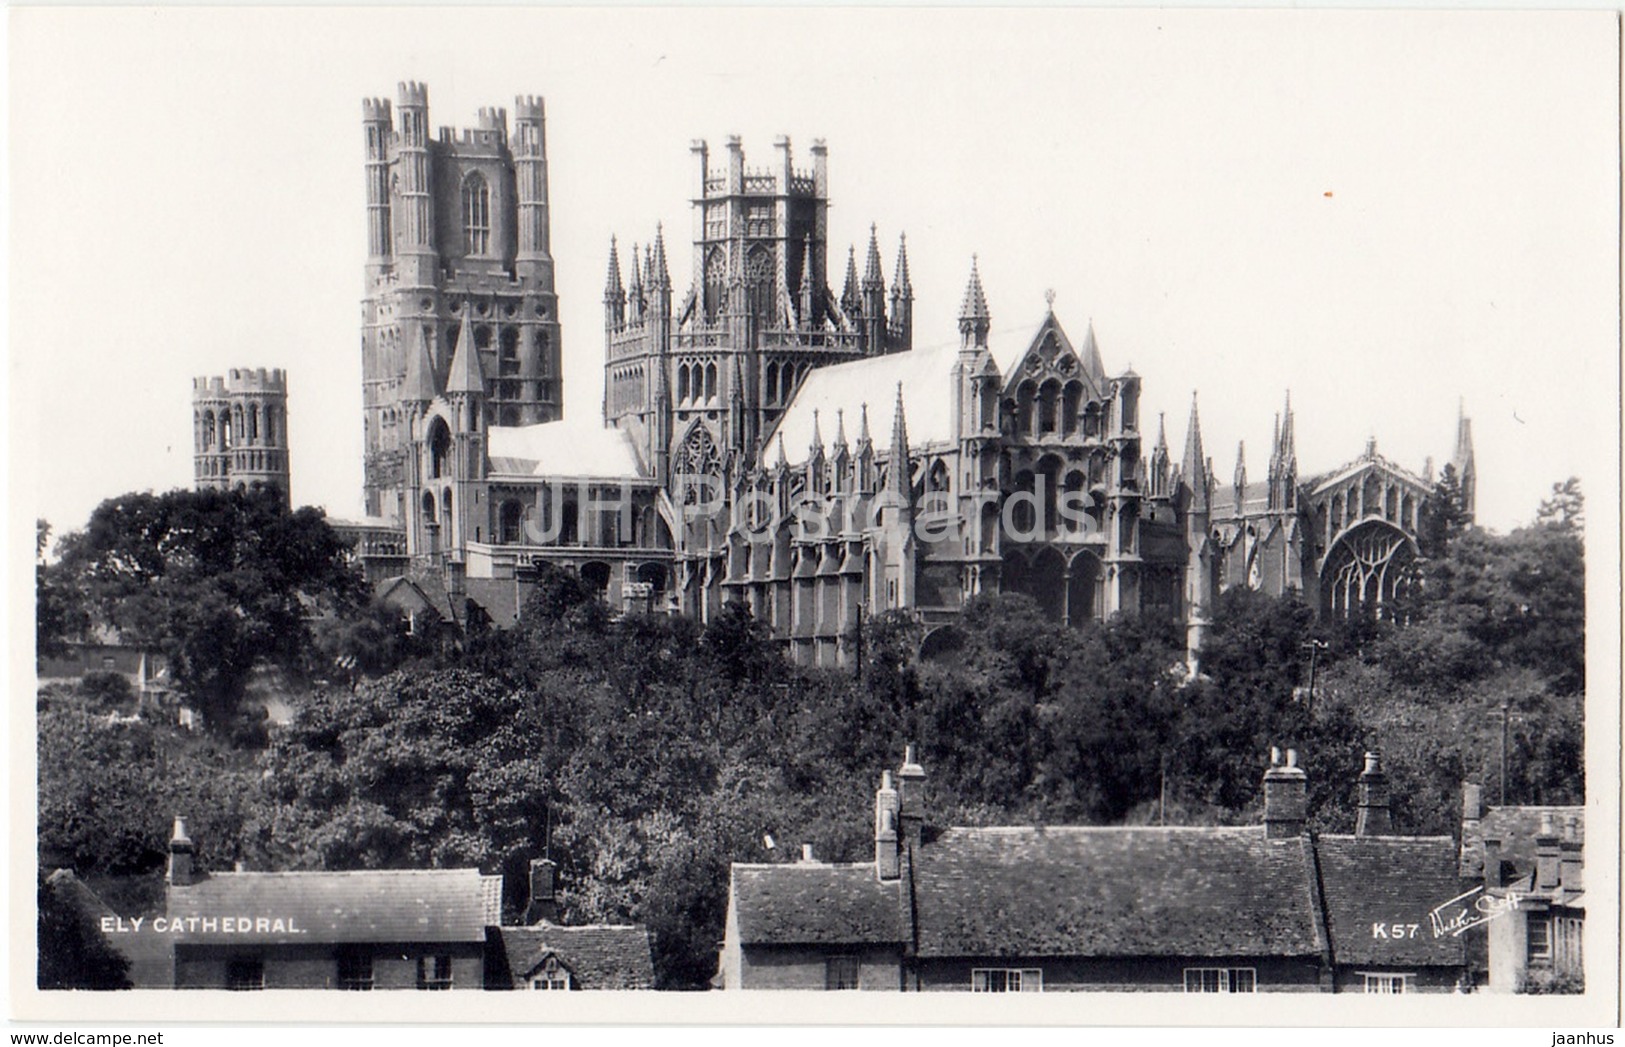 Ely Cathedral - K 57 - 1961 - United Kingdom - England - Used - Ely